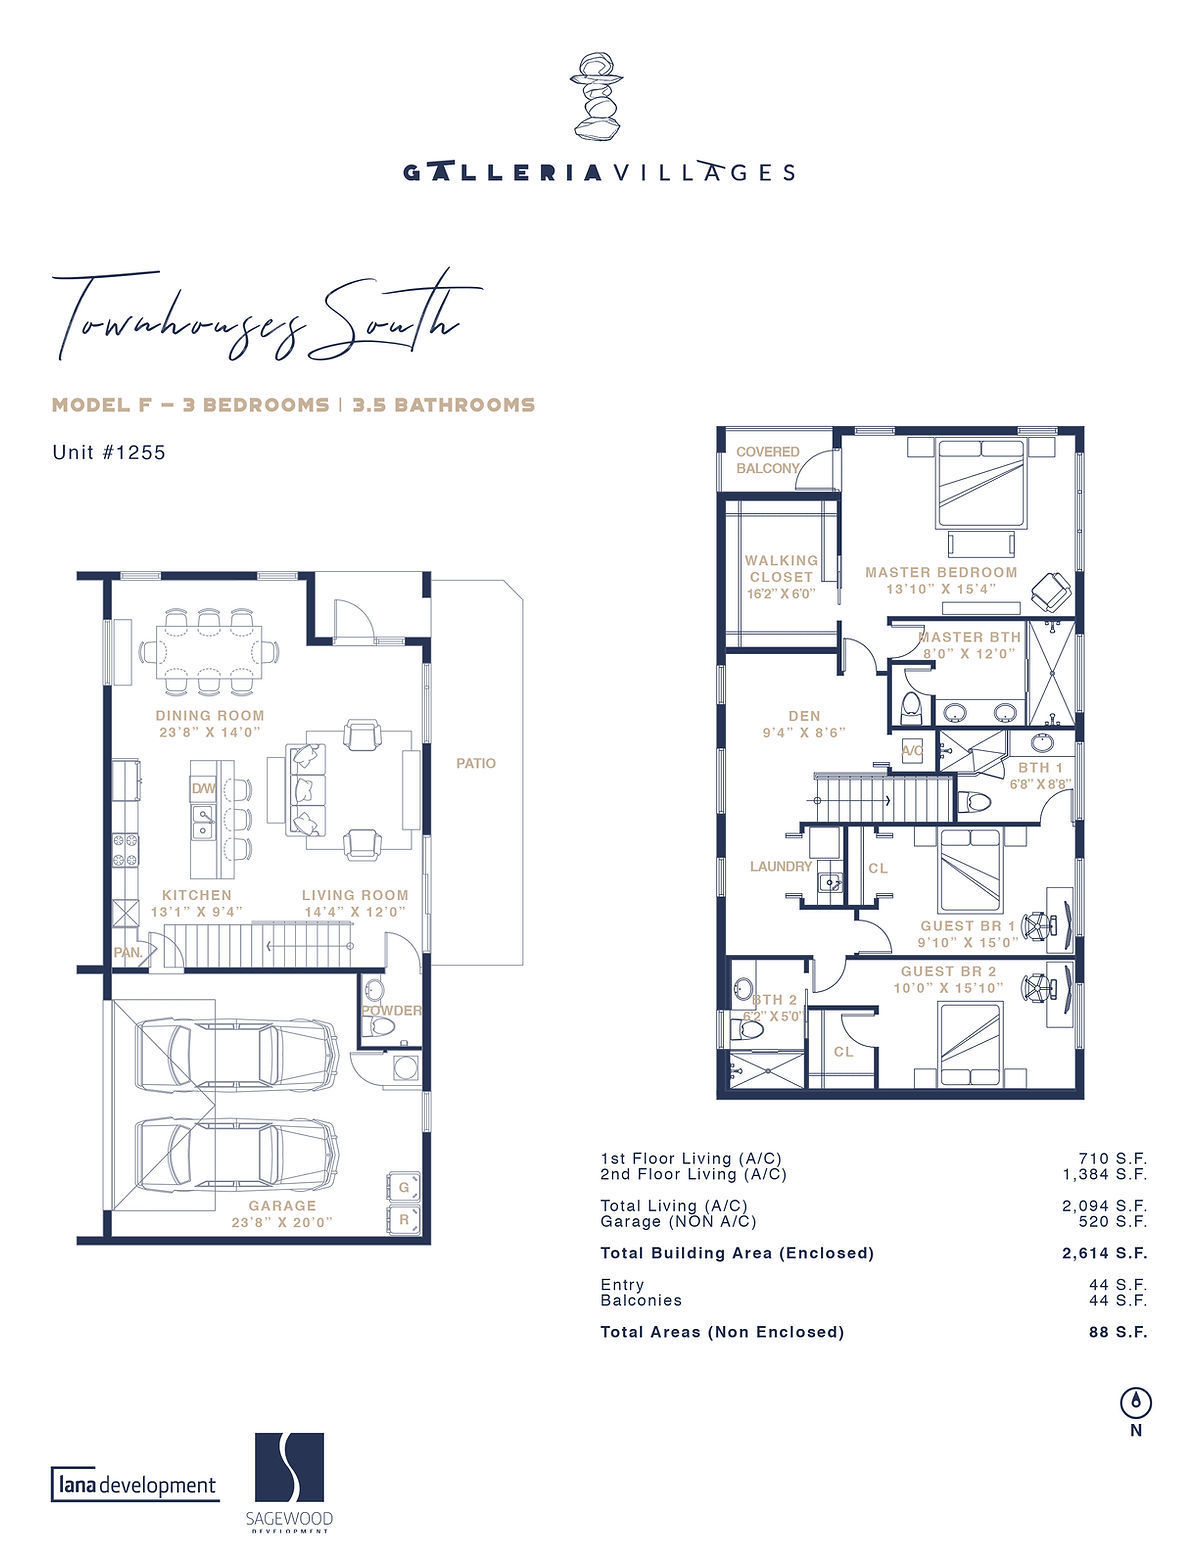 Floor Plan for Galleria Village Fort Lauderdale Floorplans, Model F